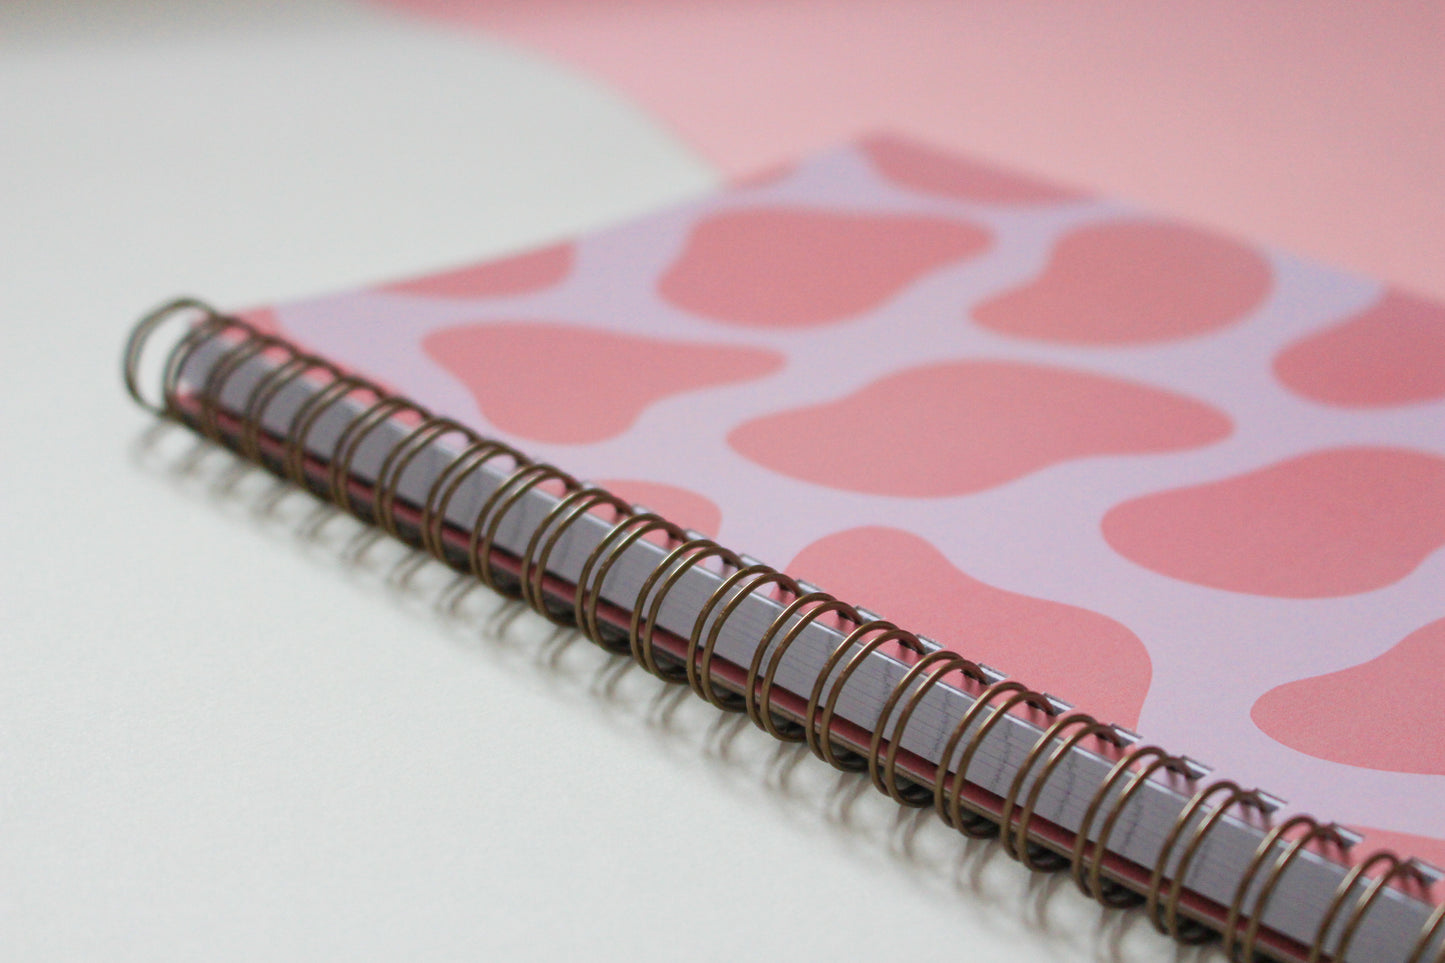 Pink Cow Print A5 Spiral Bound Notebook